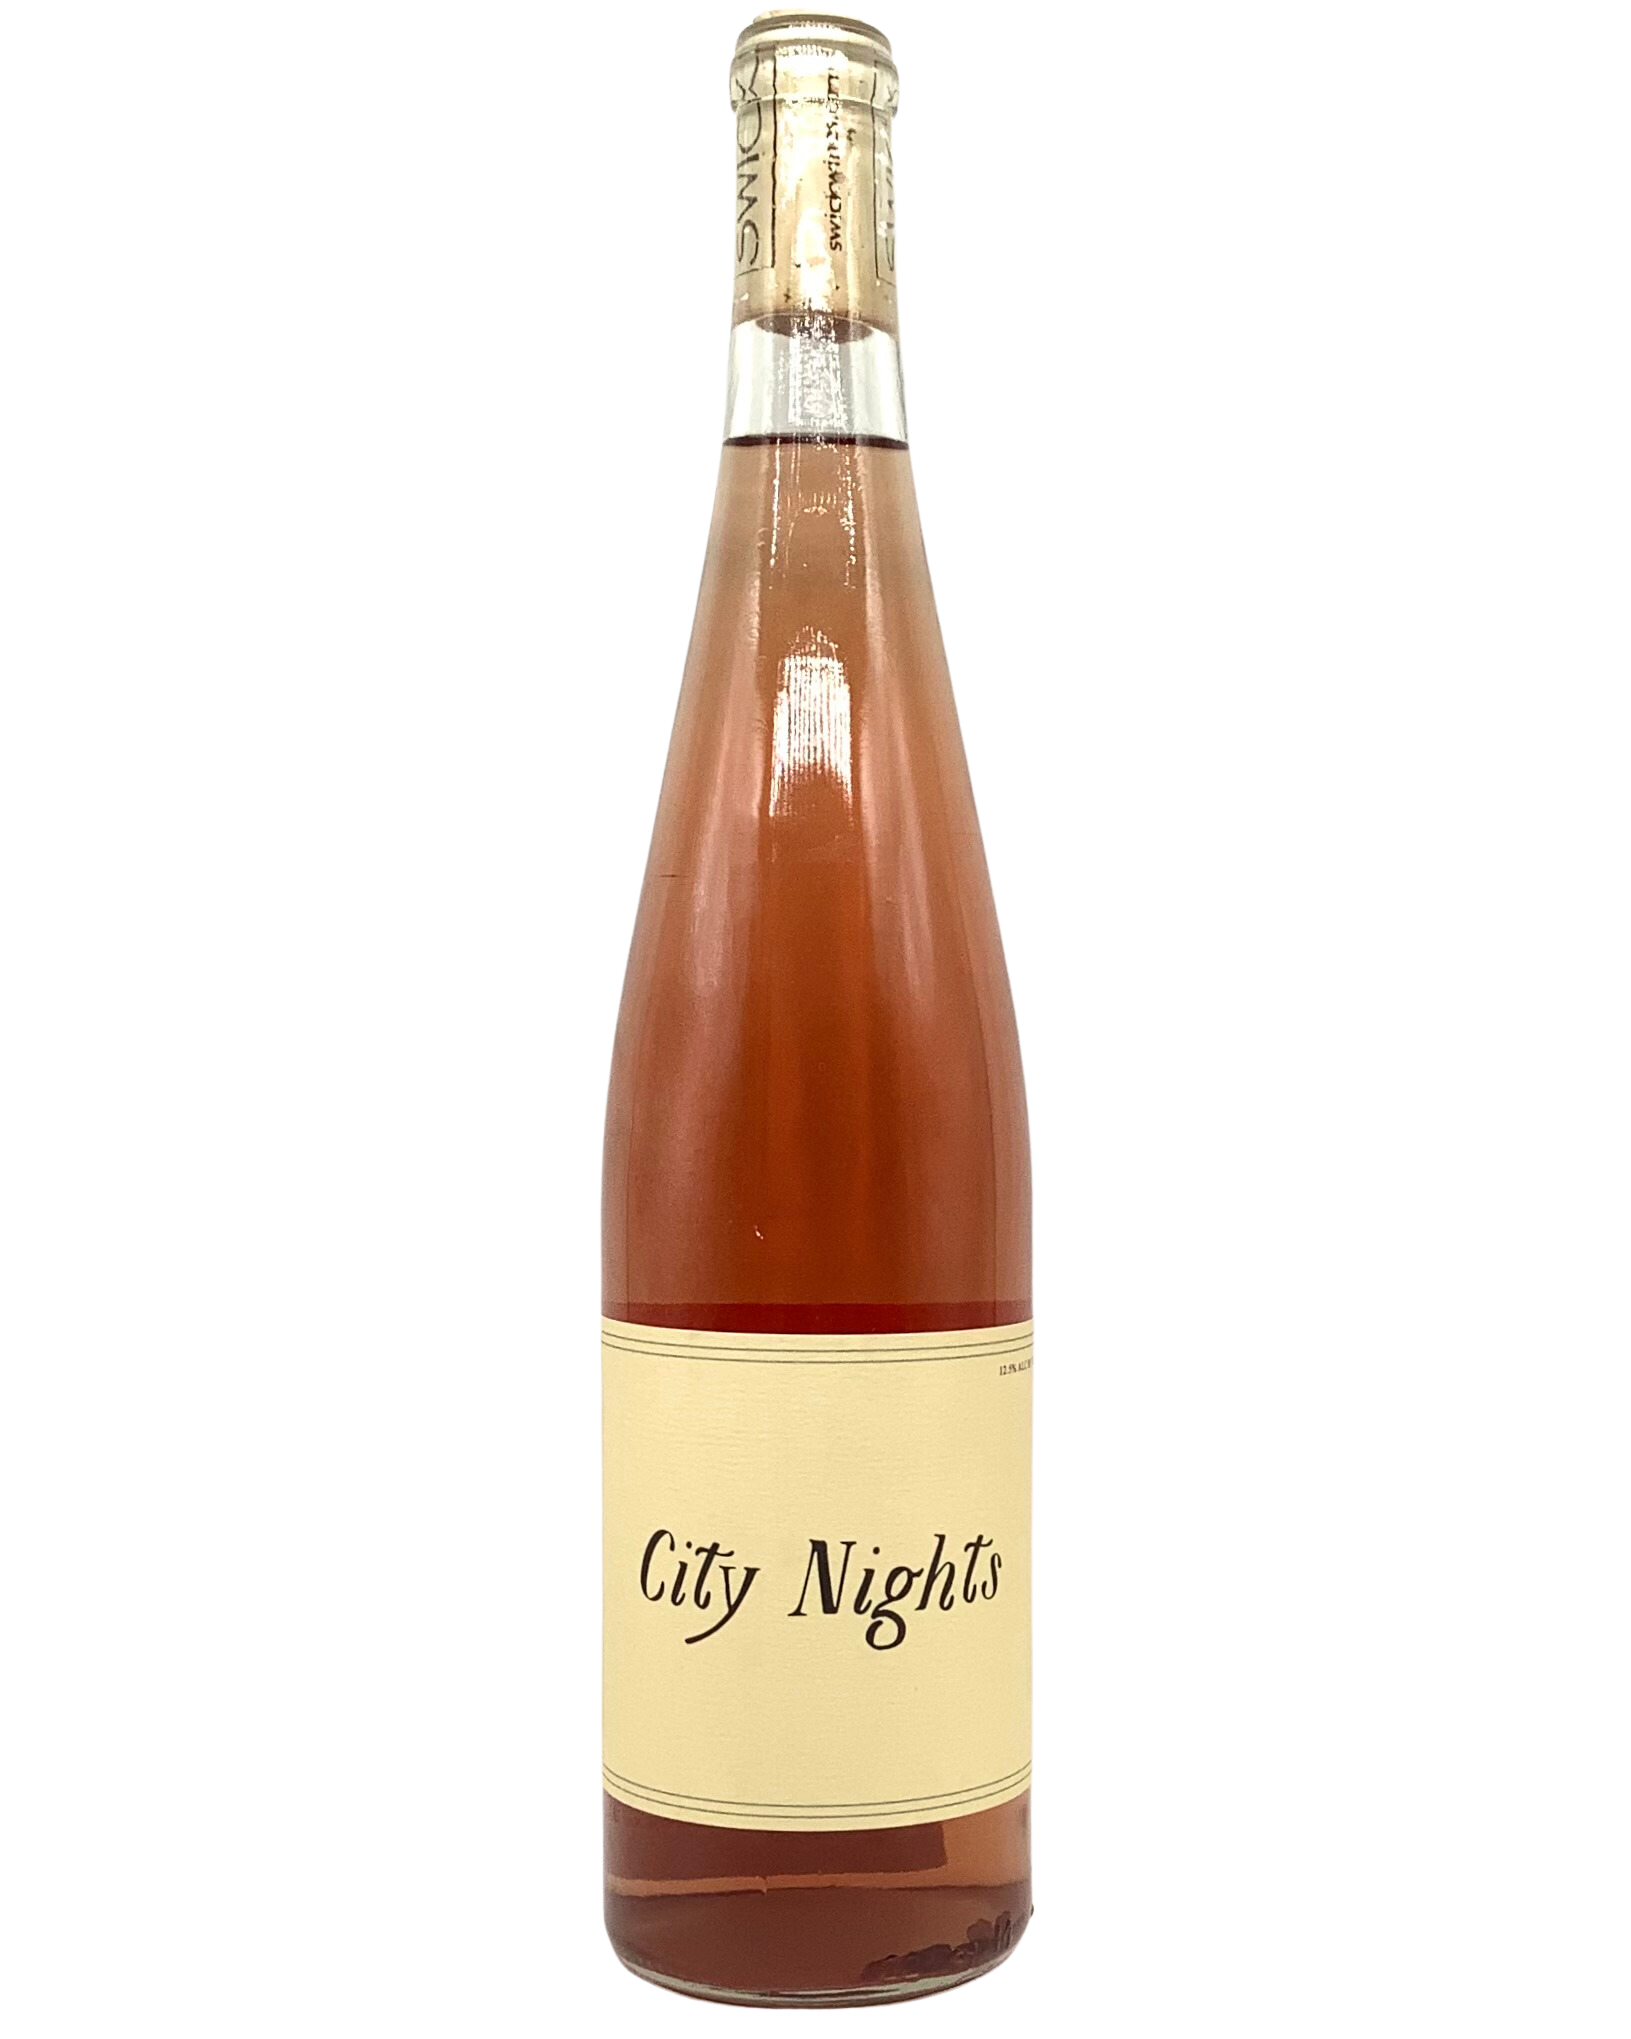 Swick Wines "City Nights" Rosé, Columbia Valley, Oregon 2021 biodynamic organic